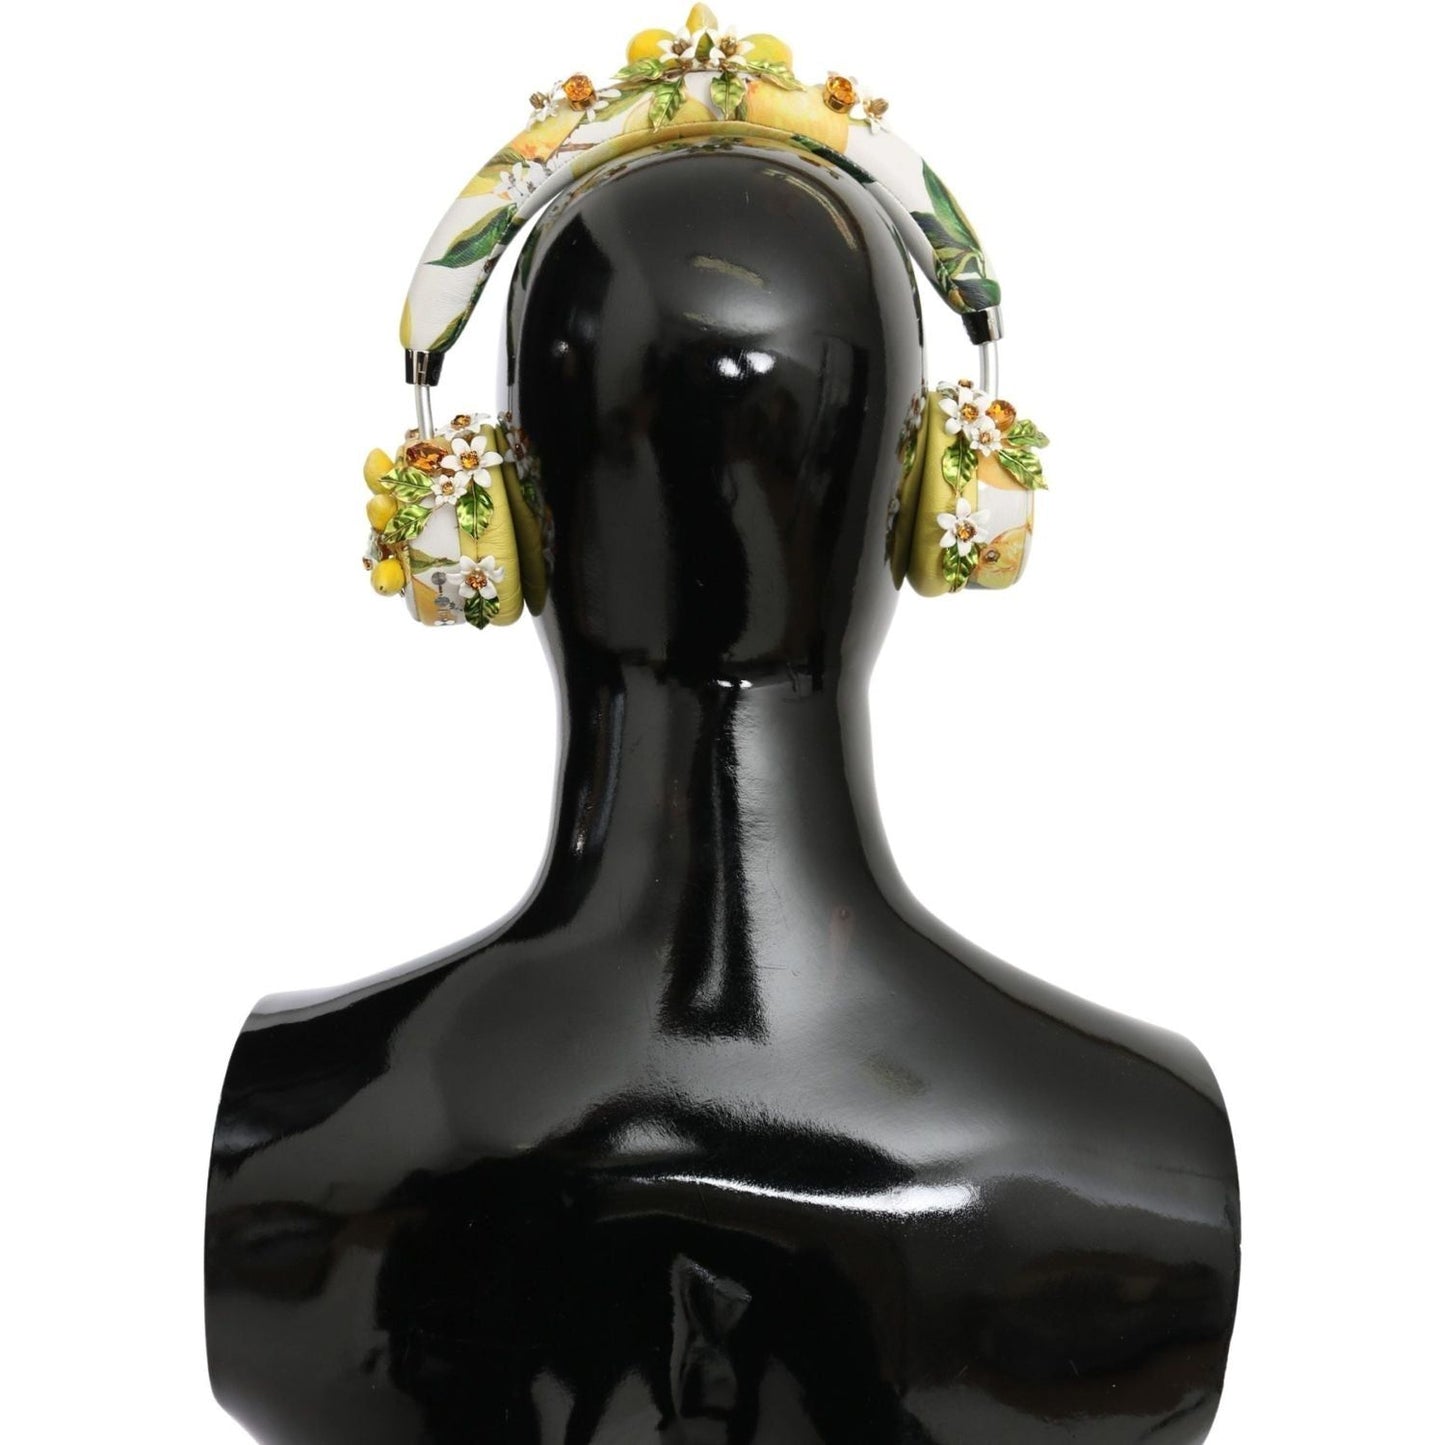 Dolce & Gabbana | Yellow Lemon Crystal Floral Headset Headphones | McRichard Designer Brands